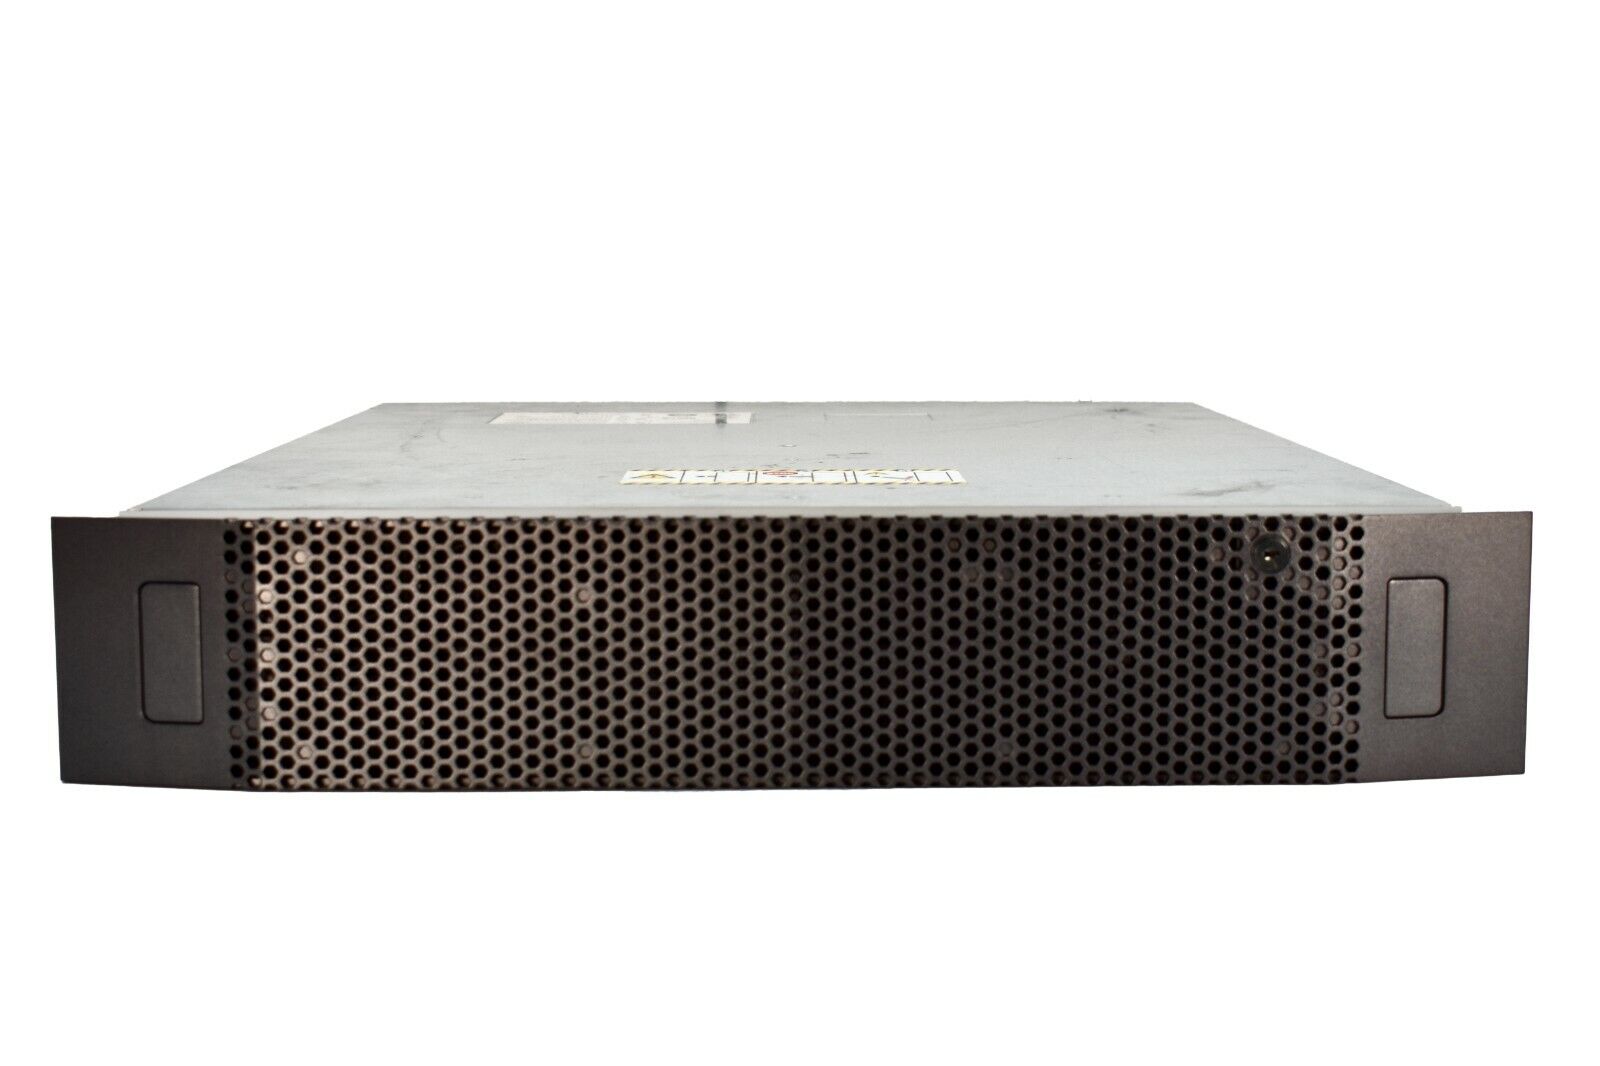 EMC VNXe Series VNXe3100 12 Bay Storage Array, 900-541-002